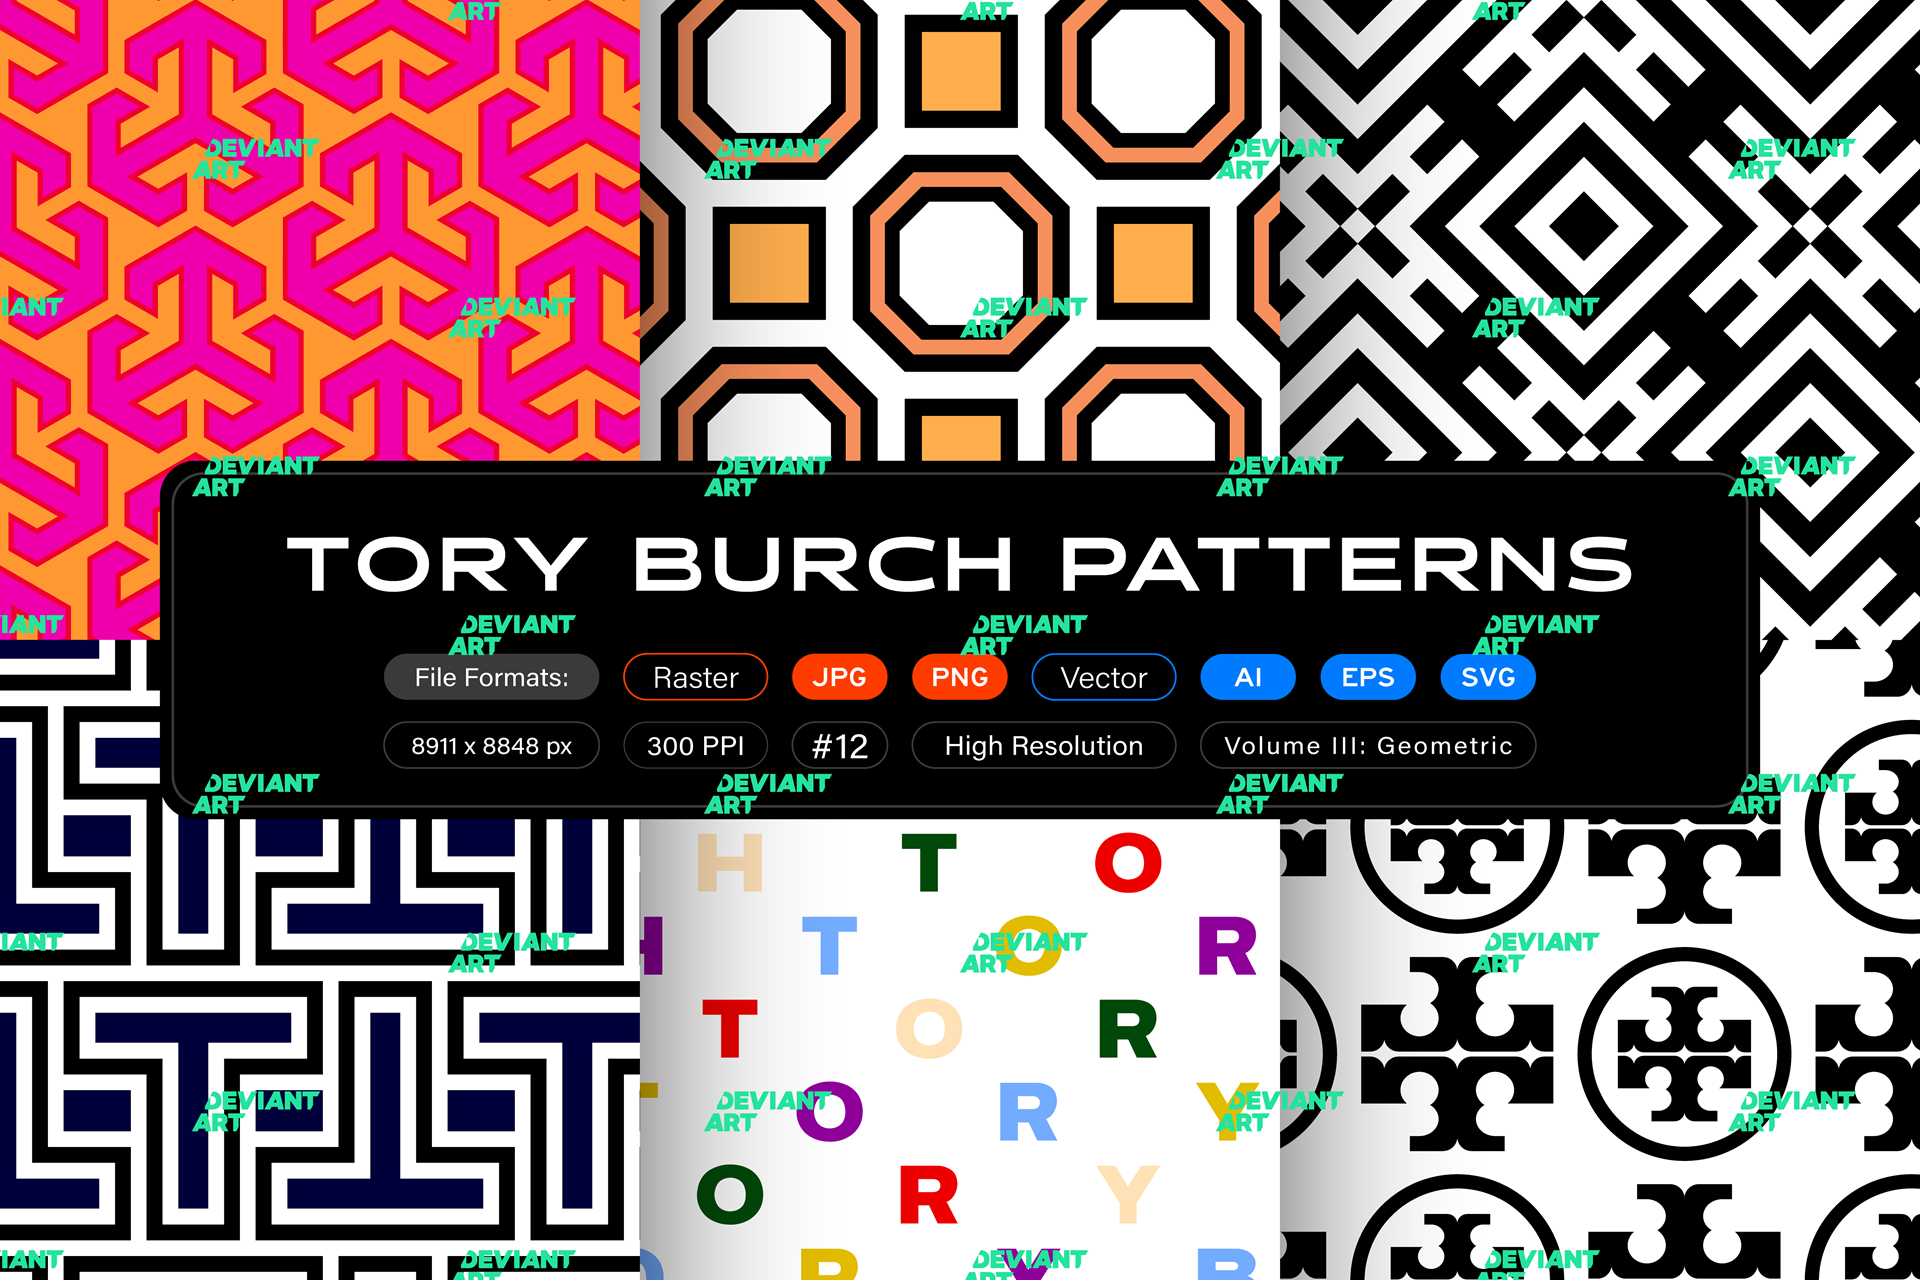 Tory Burch Patterns, Vol. 3: Geometric by itsfarahbakhsh on DeviantArt